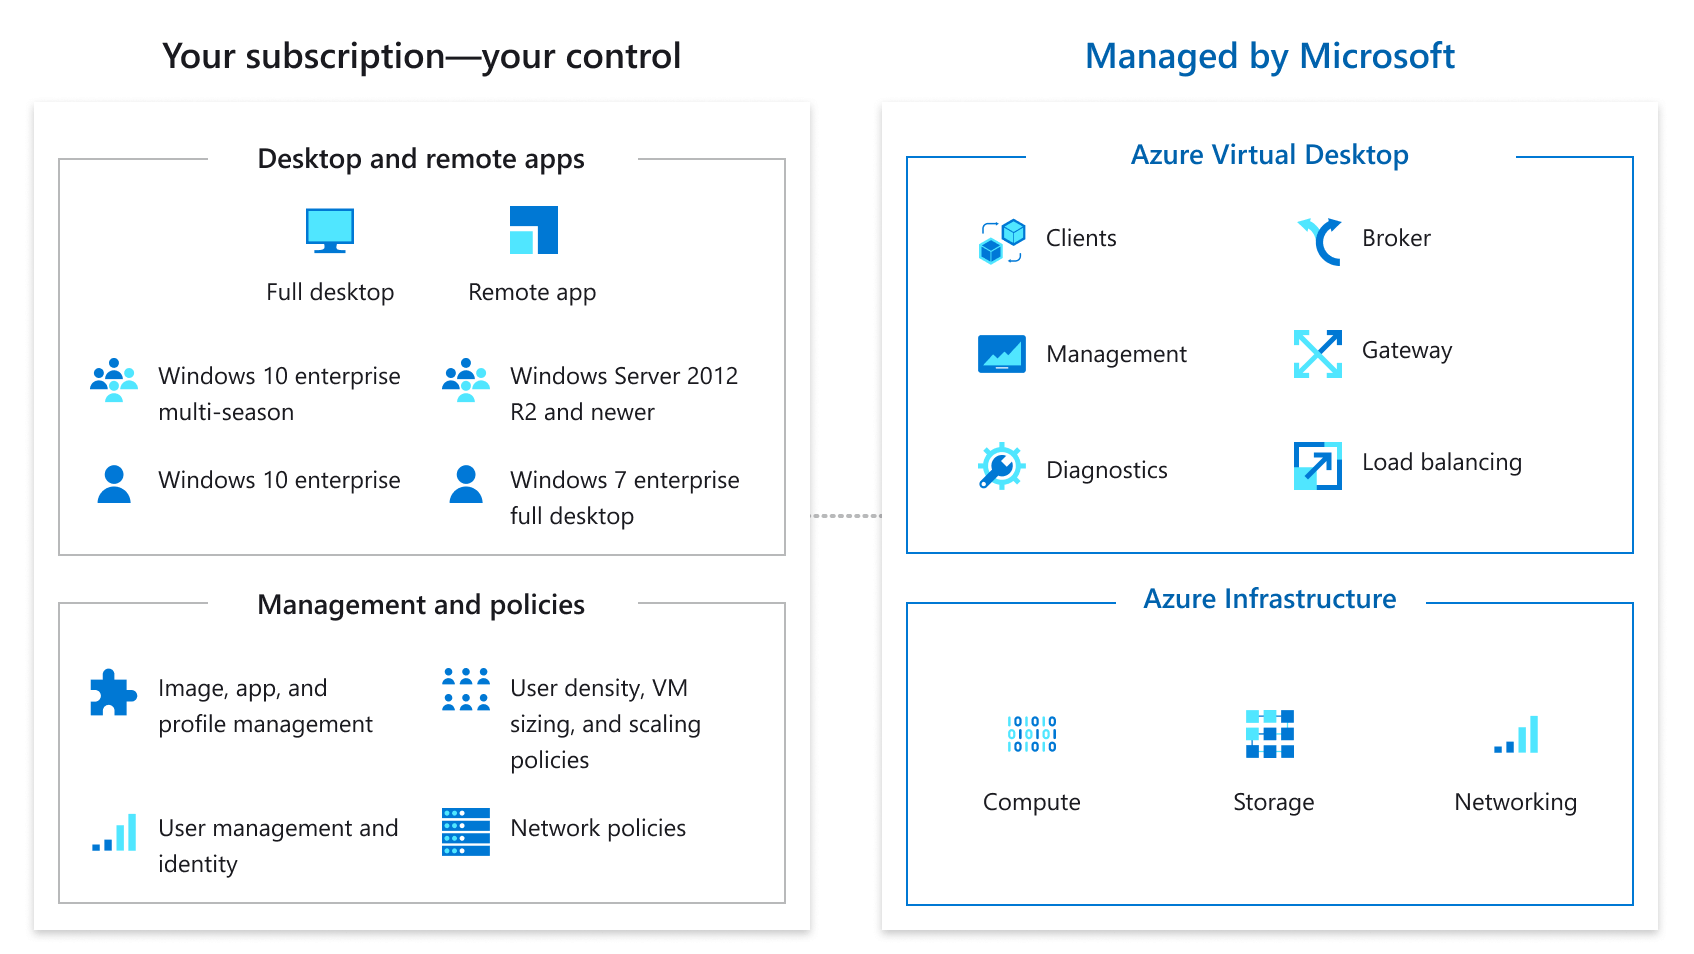 Azure Virtual Desktop Summary